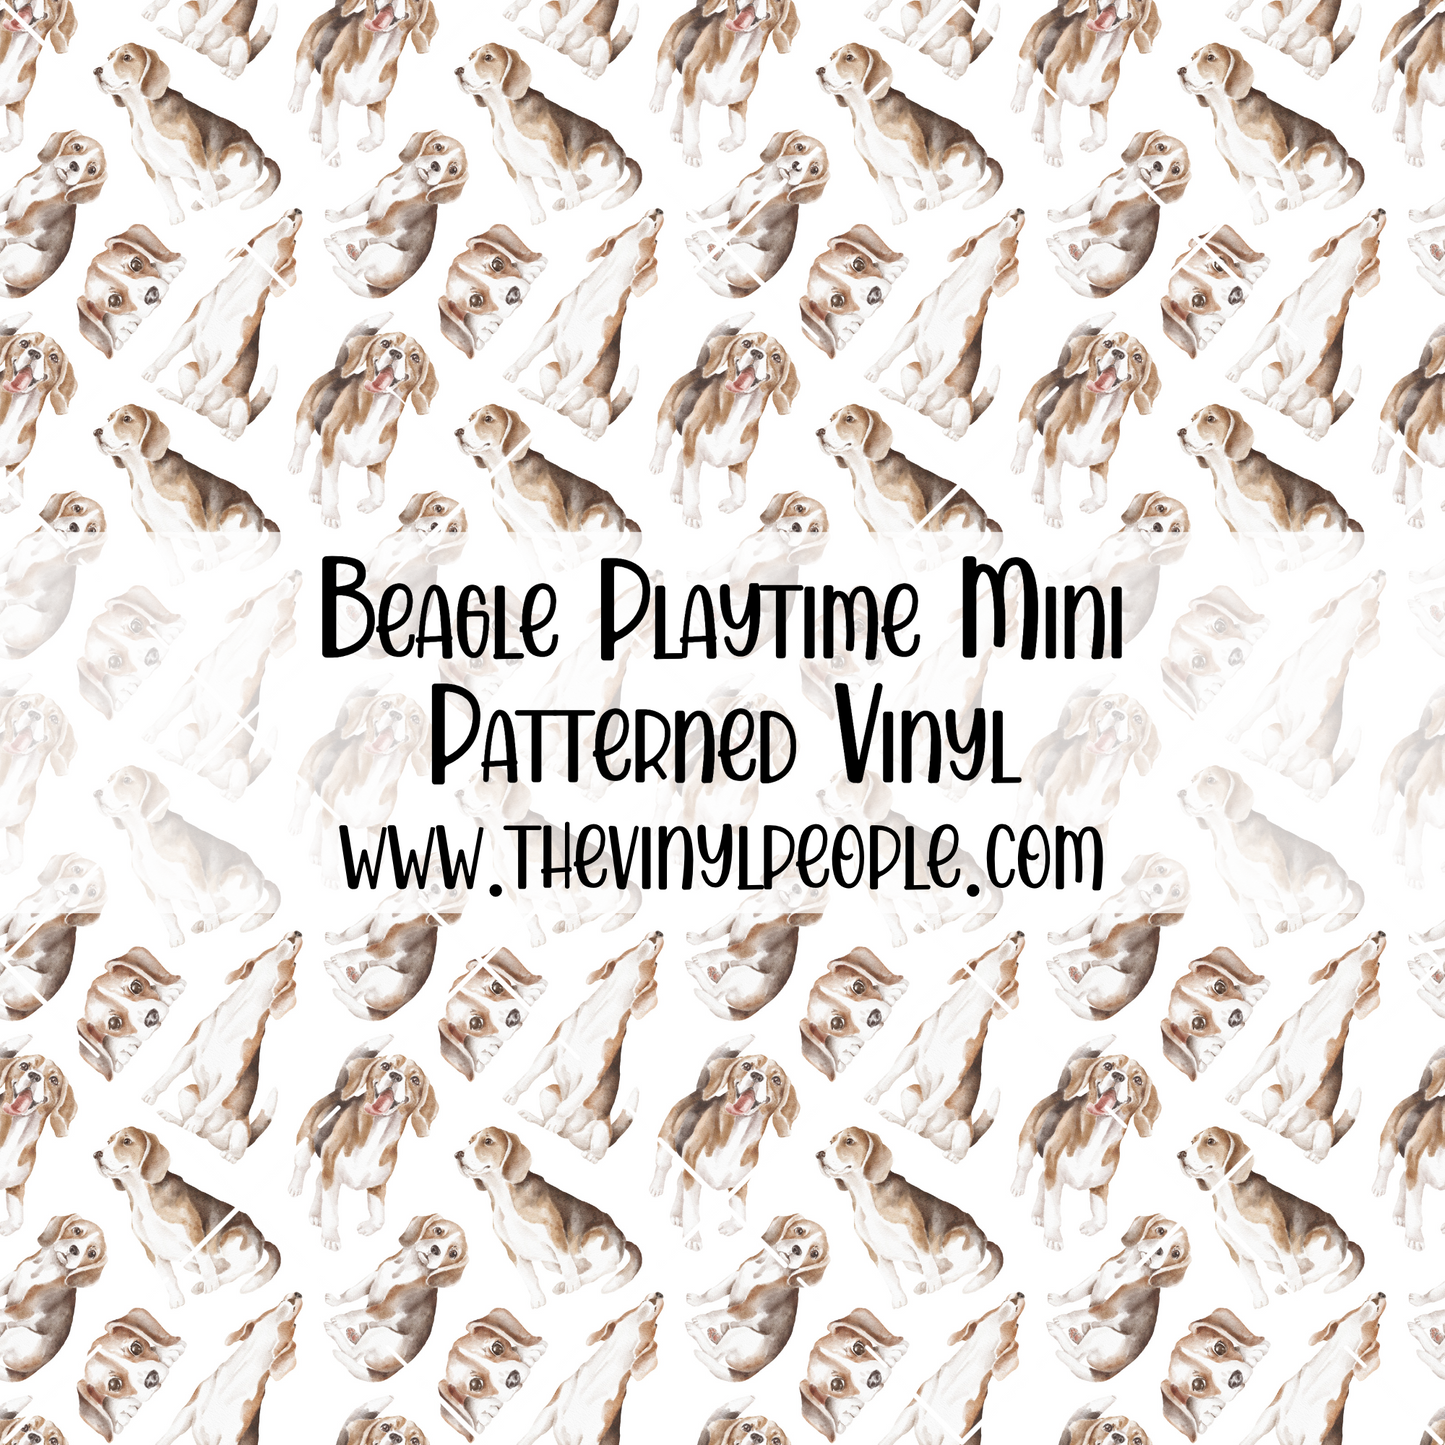 Beagle Playtime Patterned Vinyl